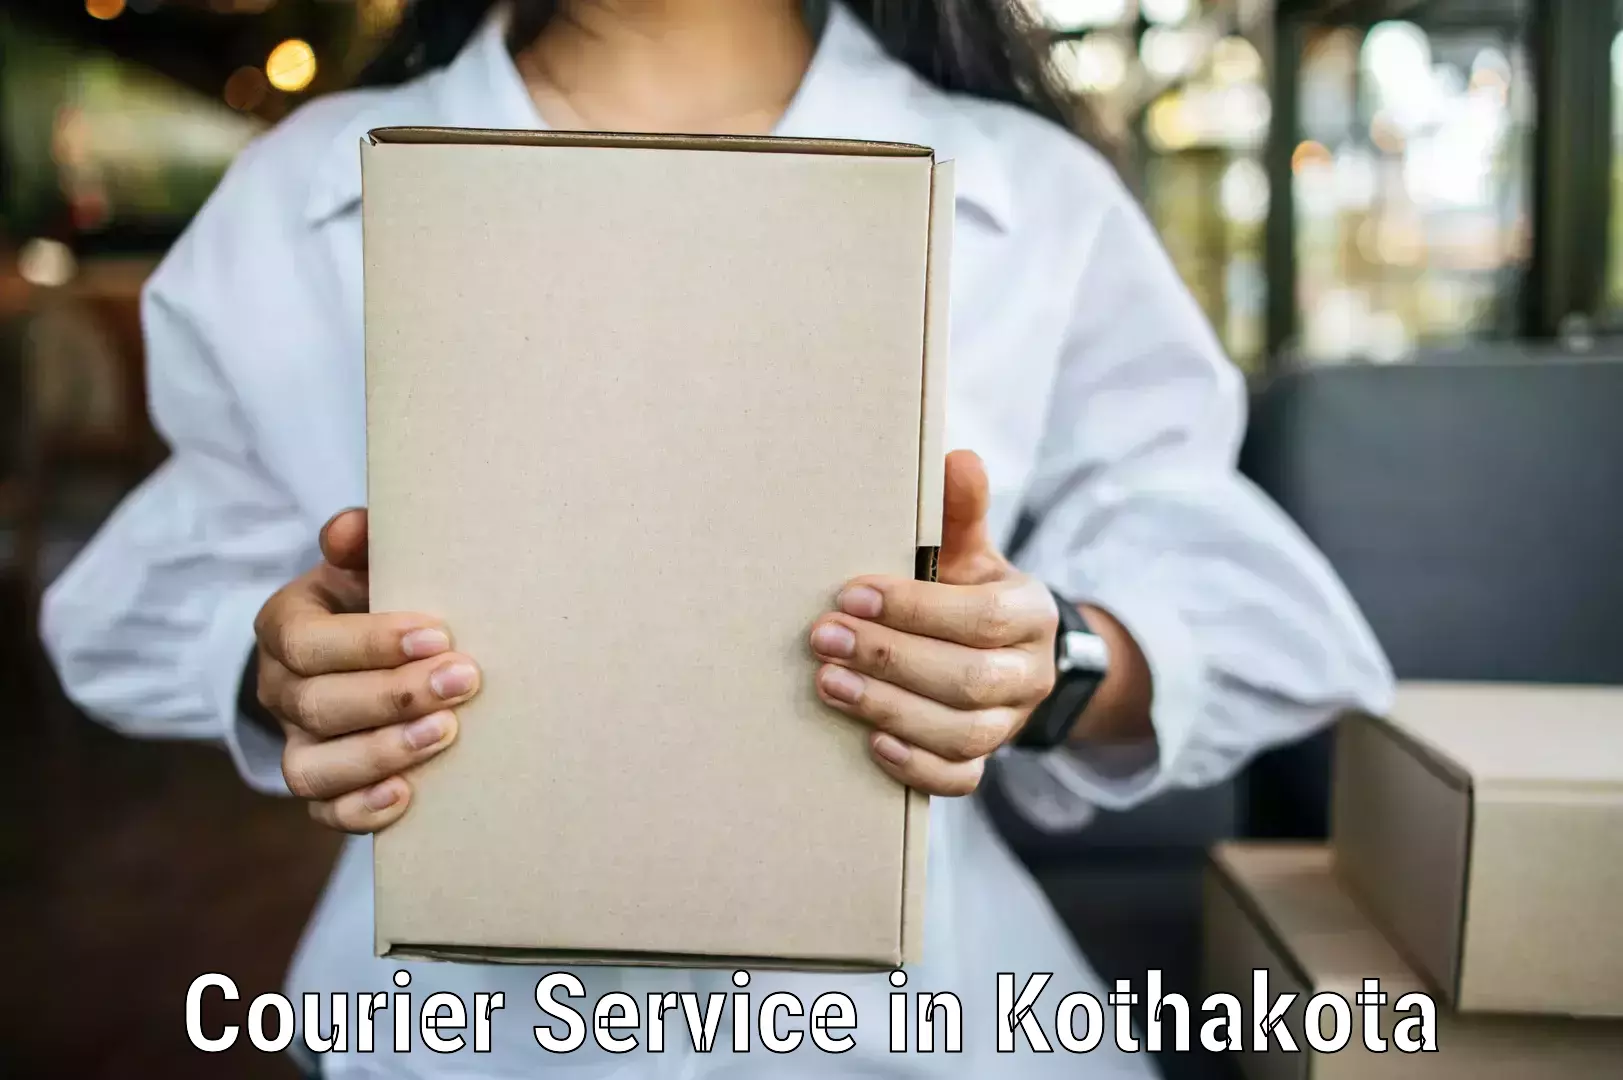 Reliable parcel services in Kothakota